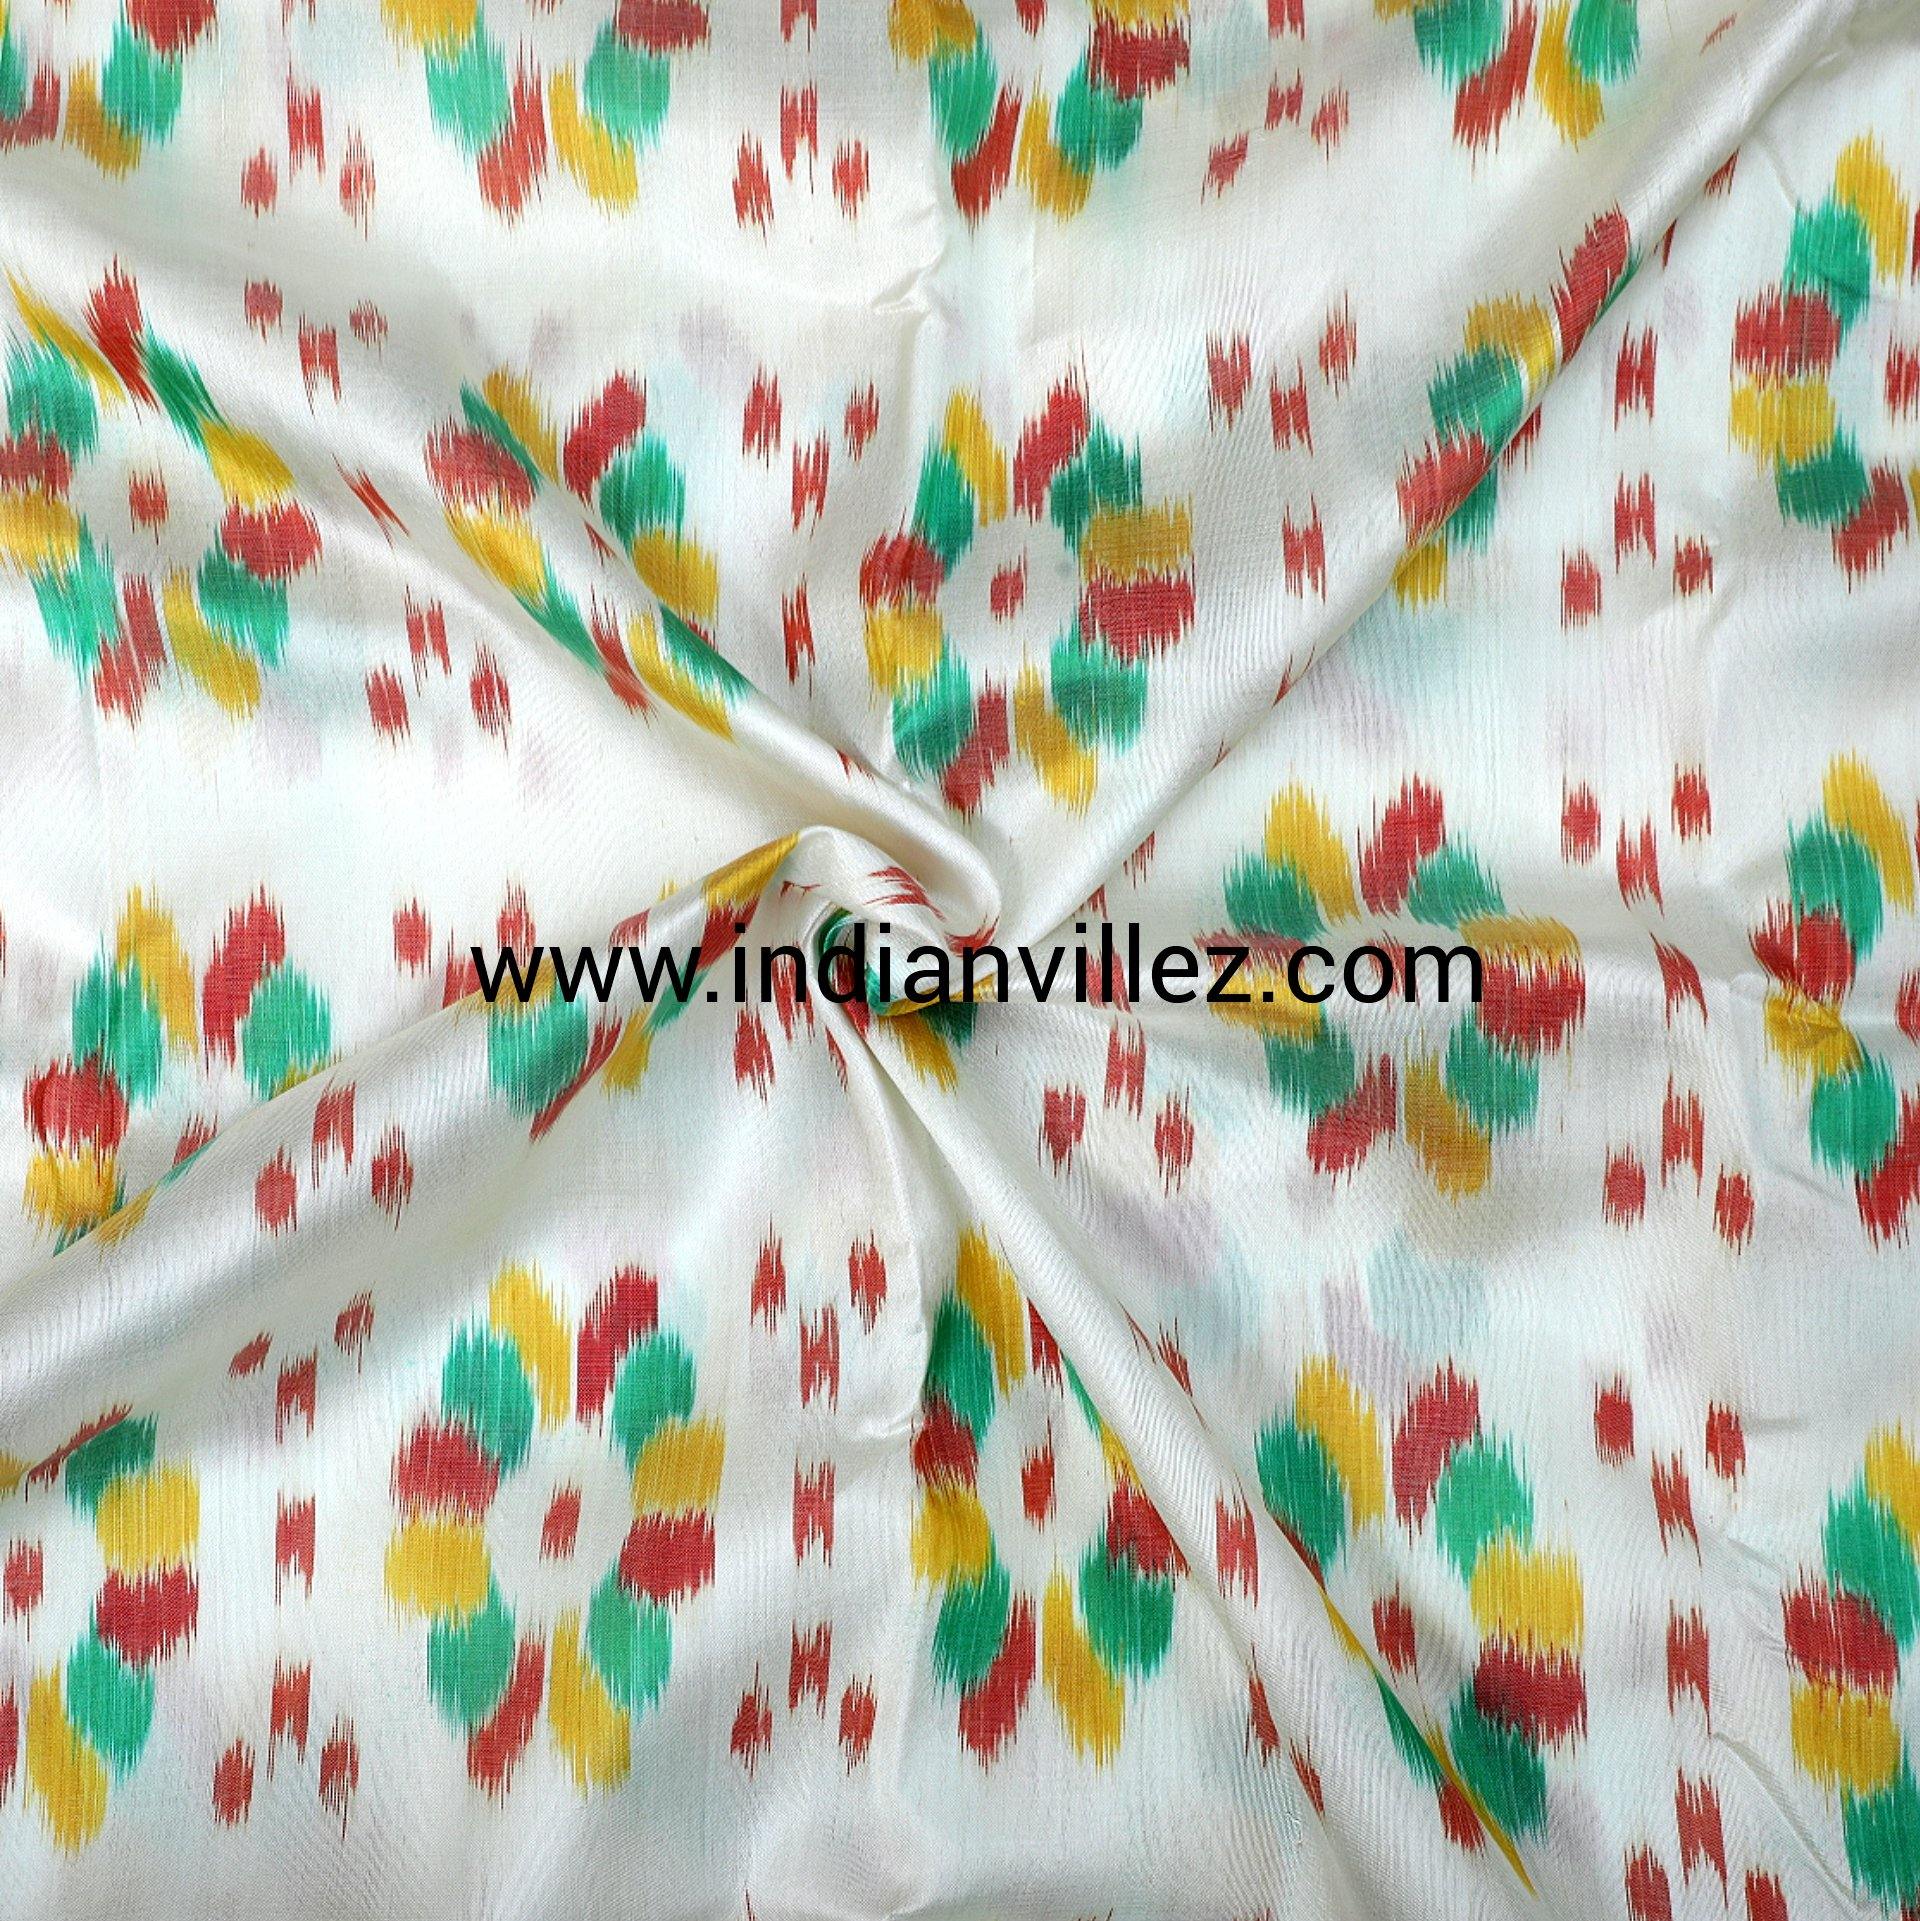 Baghambari Handloom Silk Ikat Fabric - IndianVillèz